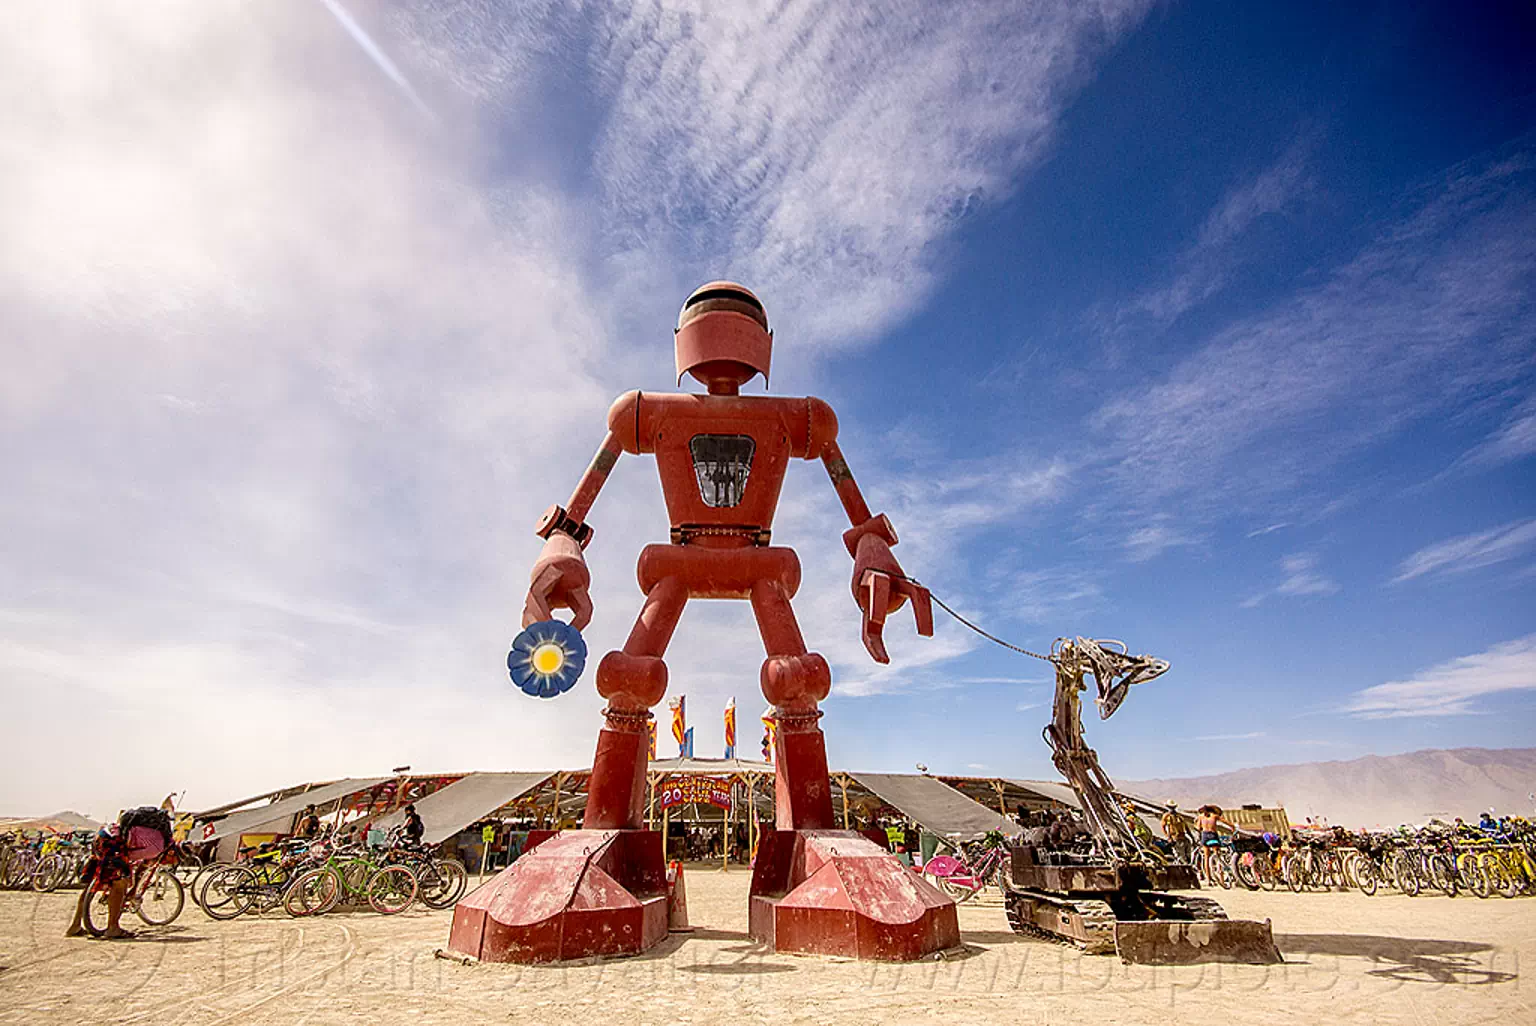 big red robot - becoming human - burning man 2015, art installation, becoming human, burning man, christian ristow, red, robot, sculpture, standing, statue, steel